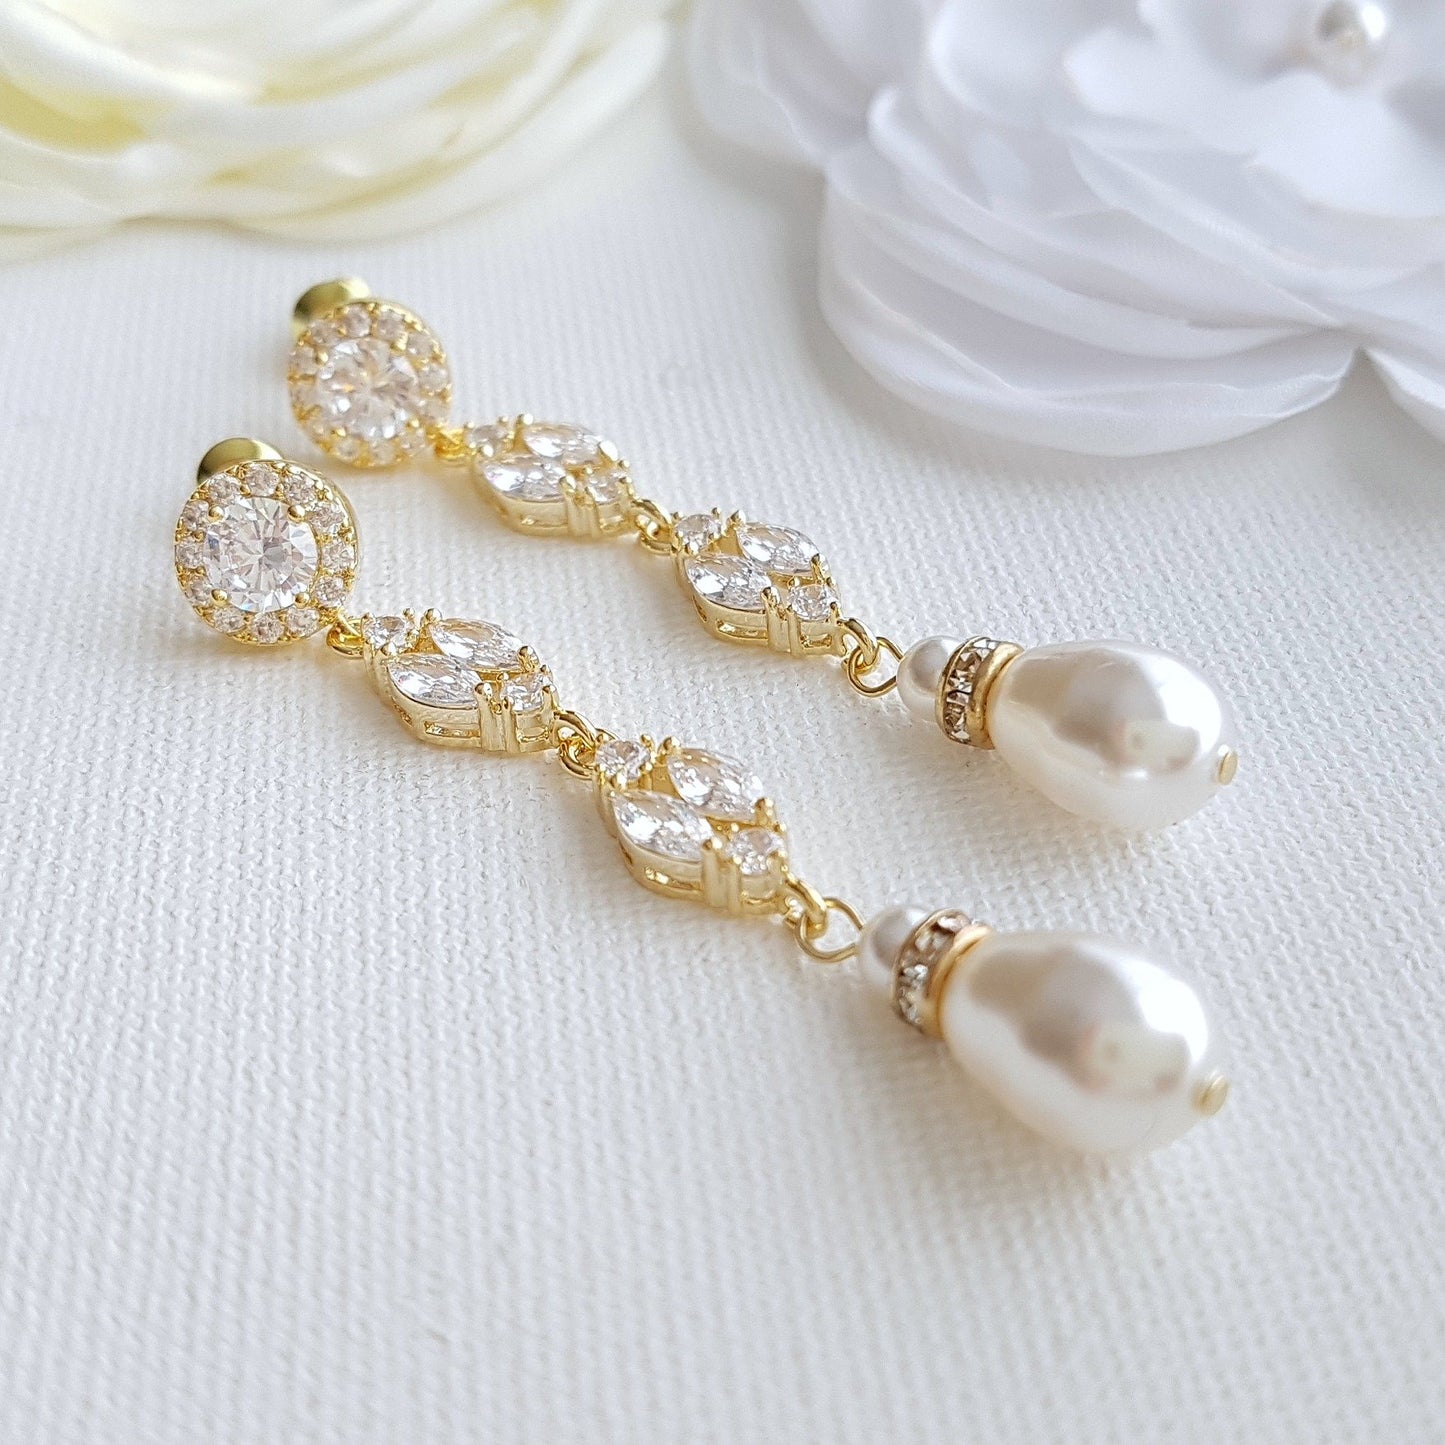 pearl earrings long and in gold for weddings- Poetry Designs